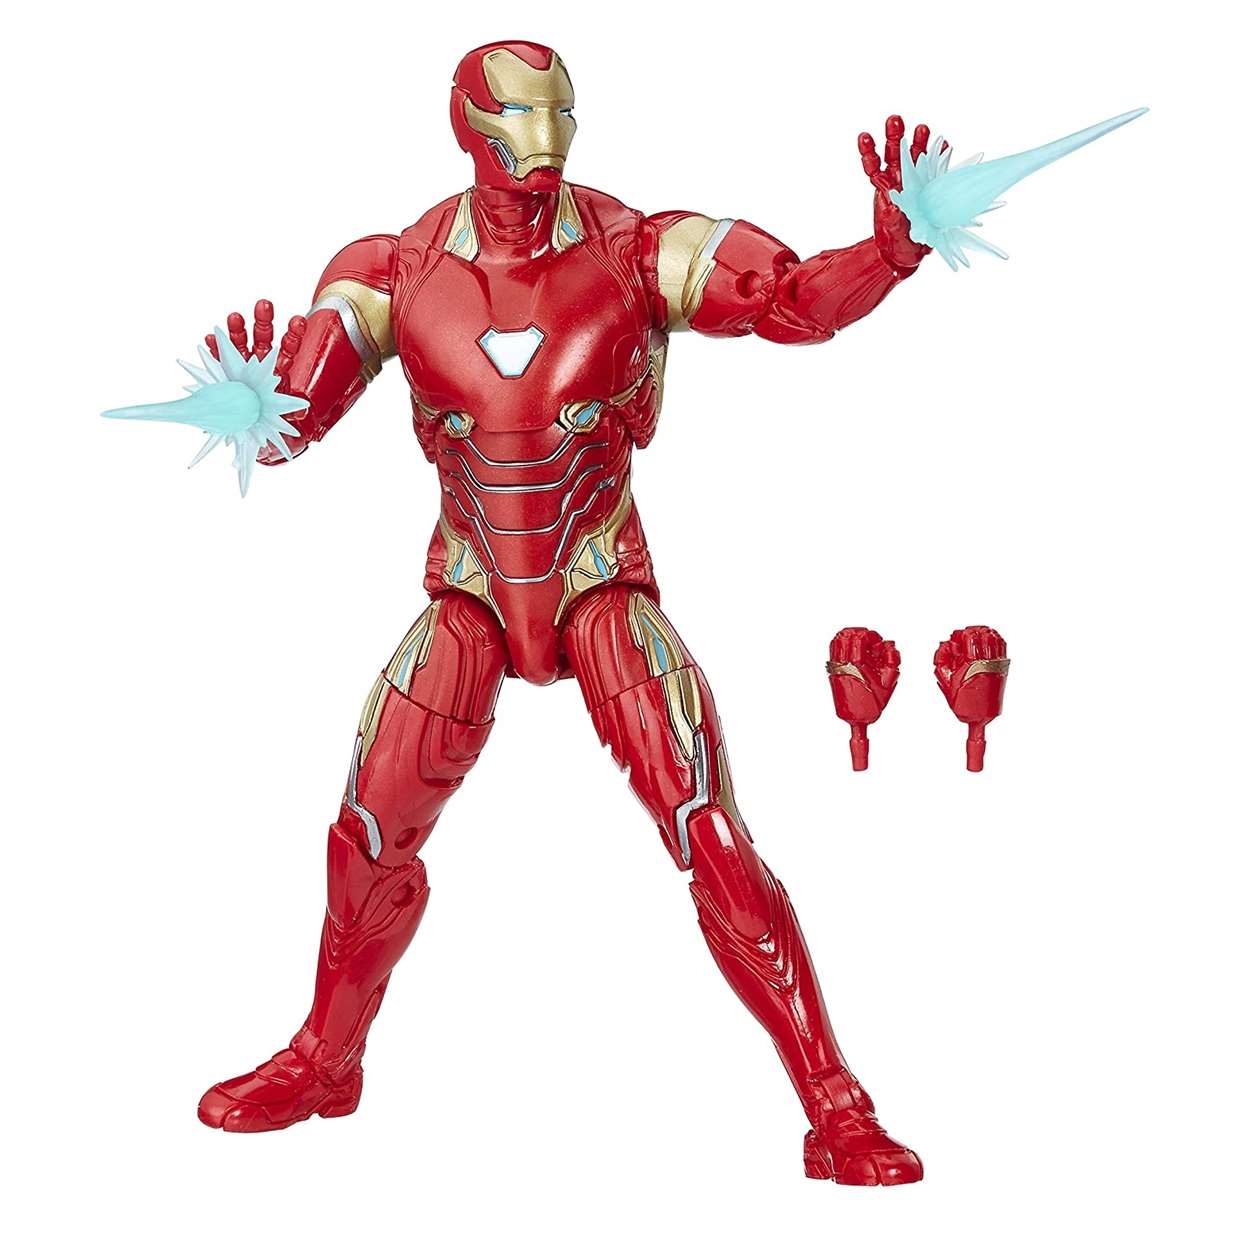 Iron Man Figura Marvel Avengers Infinity War Legends Series